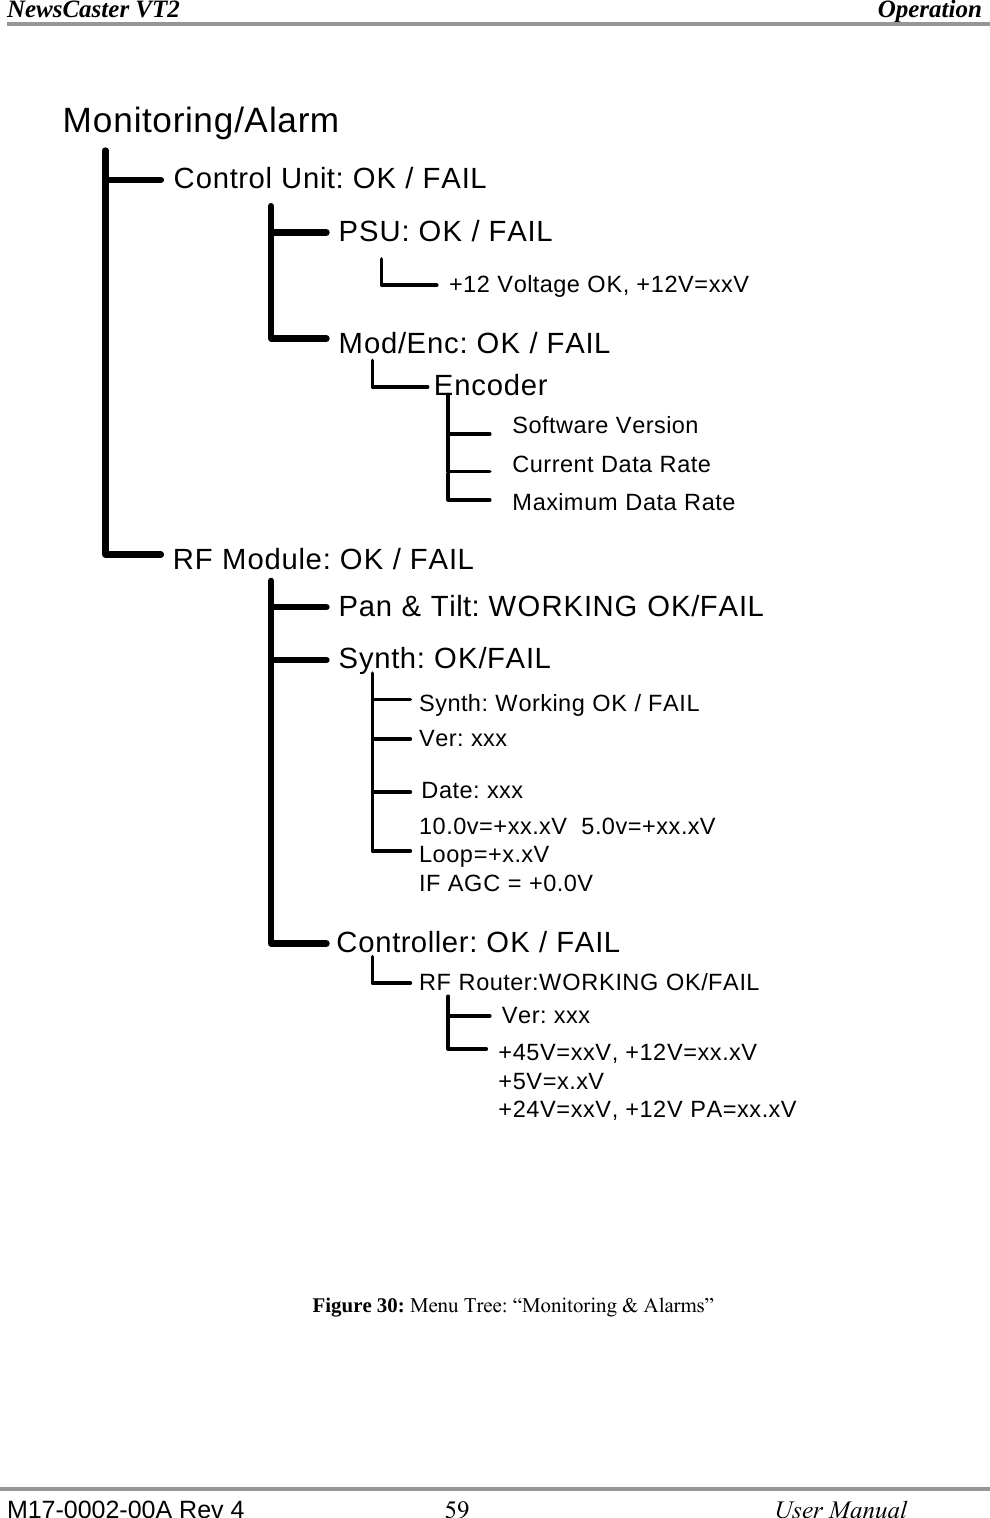 NewsCaster VT2    Operation  M17-0002-00A Rev 4 59   User Manual                                               Figure 30: Menu Tree: “Monitoring &amp; Alarms”     Monitoring/AlarmRF Module: OK / FAIL Control Unit: OK / FAIL EncoderPSU: OK / FAILPan &amp; Tilt: WORKING OK/FAIL+12 Voltage OK, +12V=xxVMod/Enc: OK / FAILSynth: OK/FAILSynth: Working OK / FAILRF Router:WORKING OK/FAILVer: xxx+45V=xxV, +12V=xx.xV+5V=x.xV+24V=xxV, +12V PA=xx.xVCurrent Data RateSoftware VersionMaximum Data Rate10.0v=+xx.xV  5.0v=+xx.xV Loop=+x.xVIF AGC = +0.0VController: OK / FAILVer: xxxDate: xxx